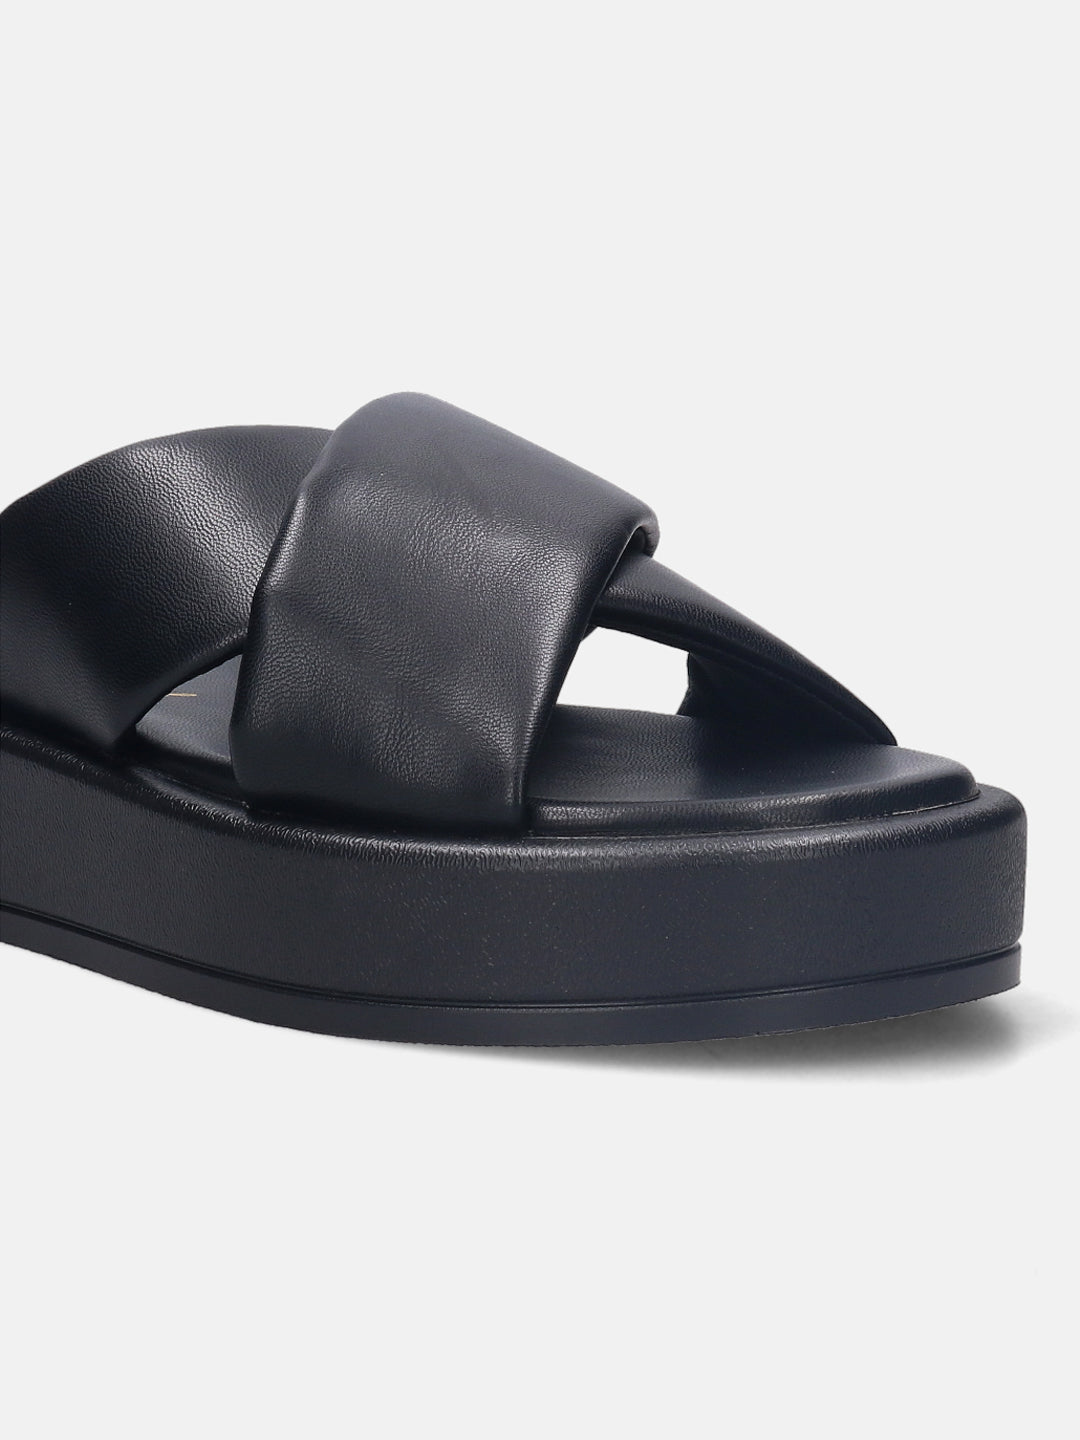 Hanoi Black Flatform Sandals - BAGATT